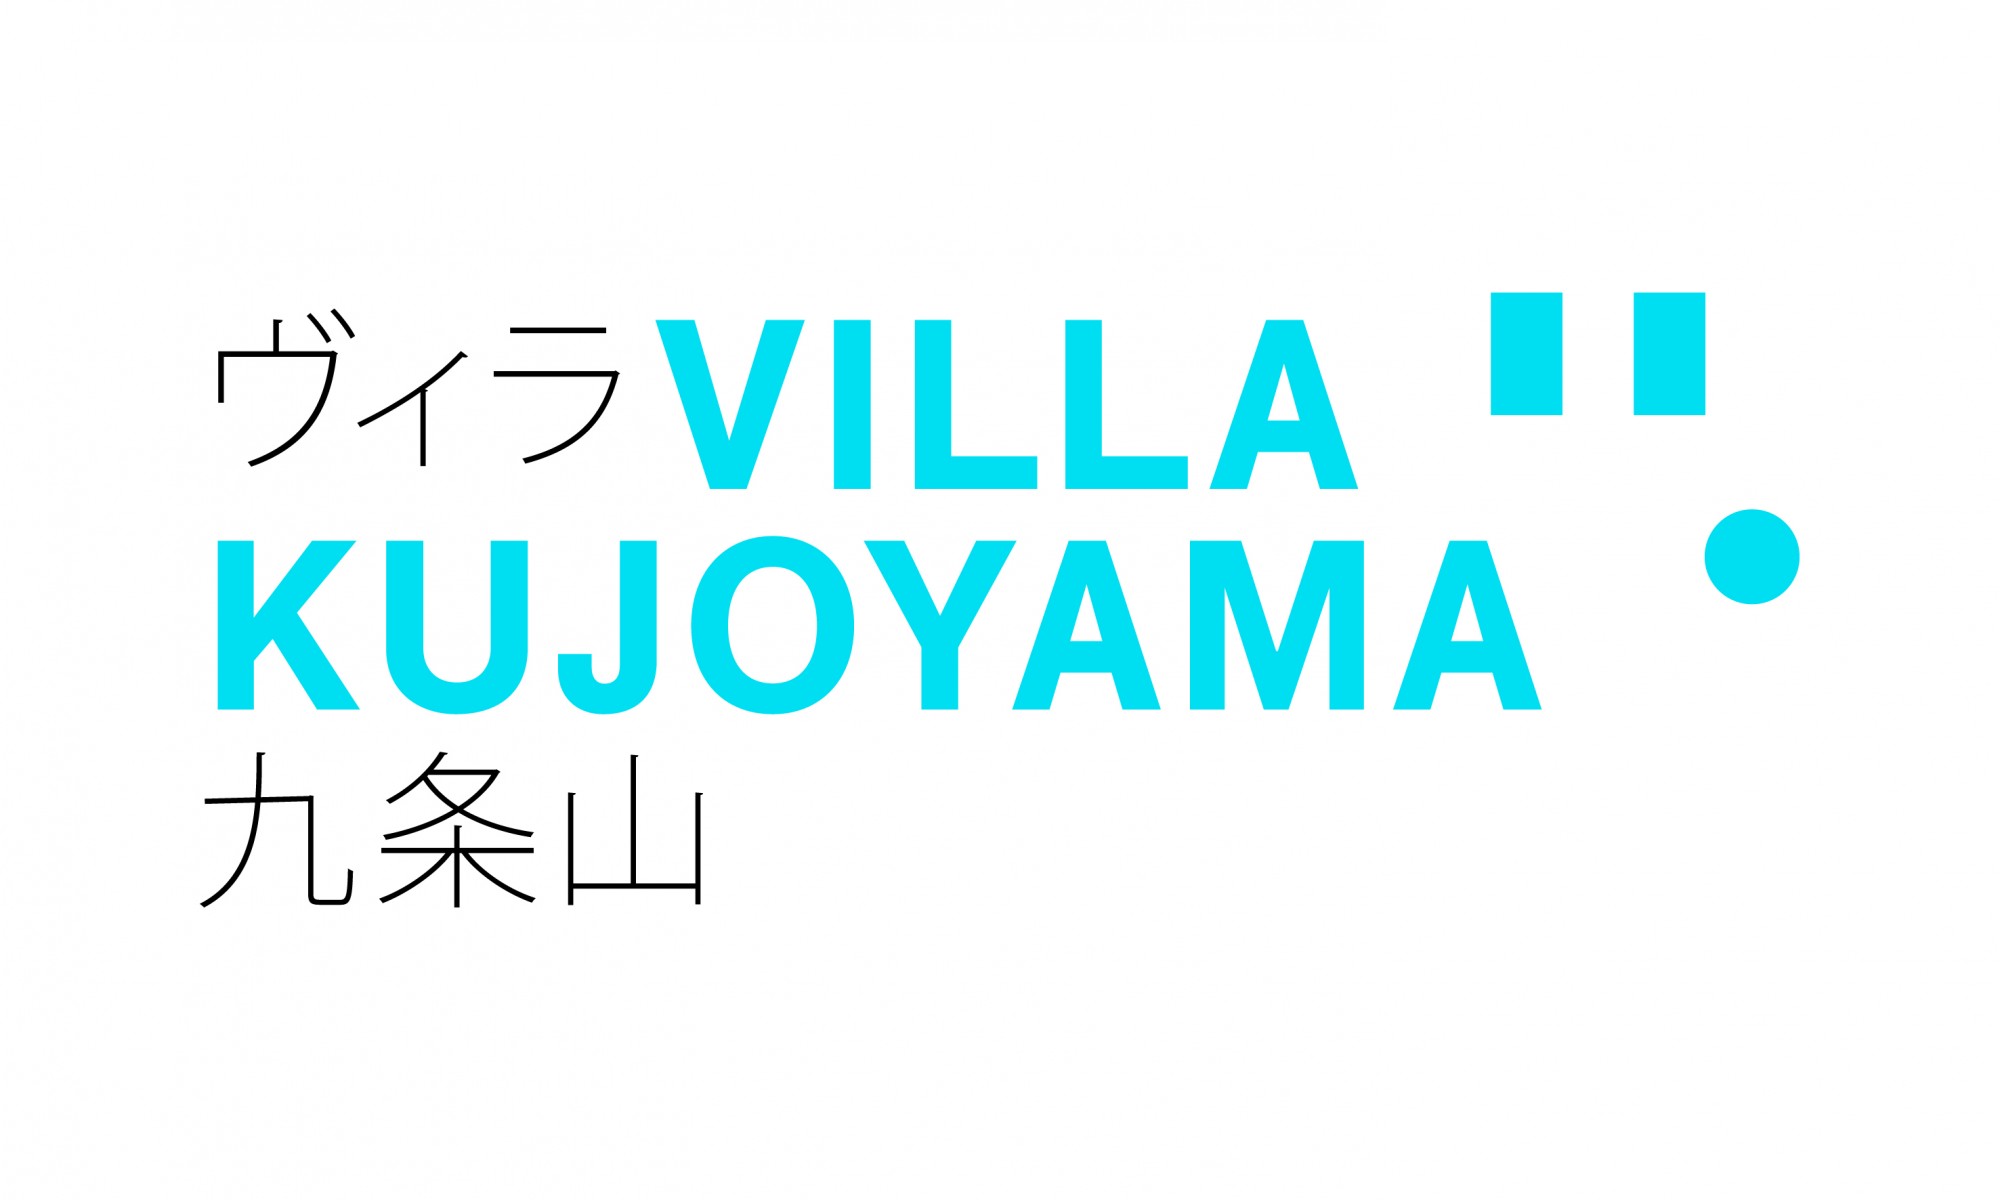 Villa Kujoyama